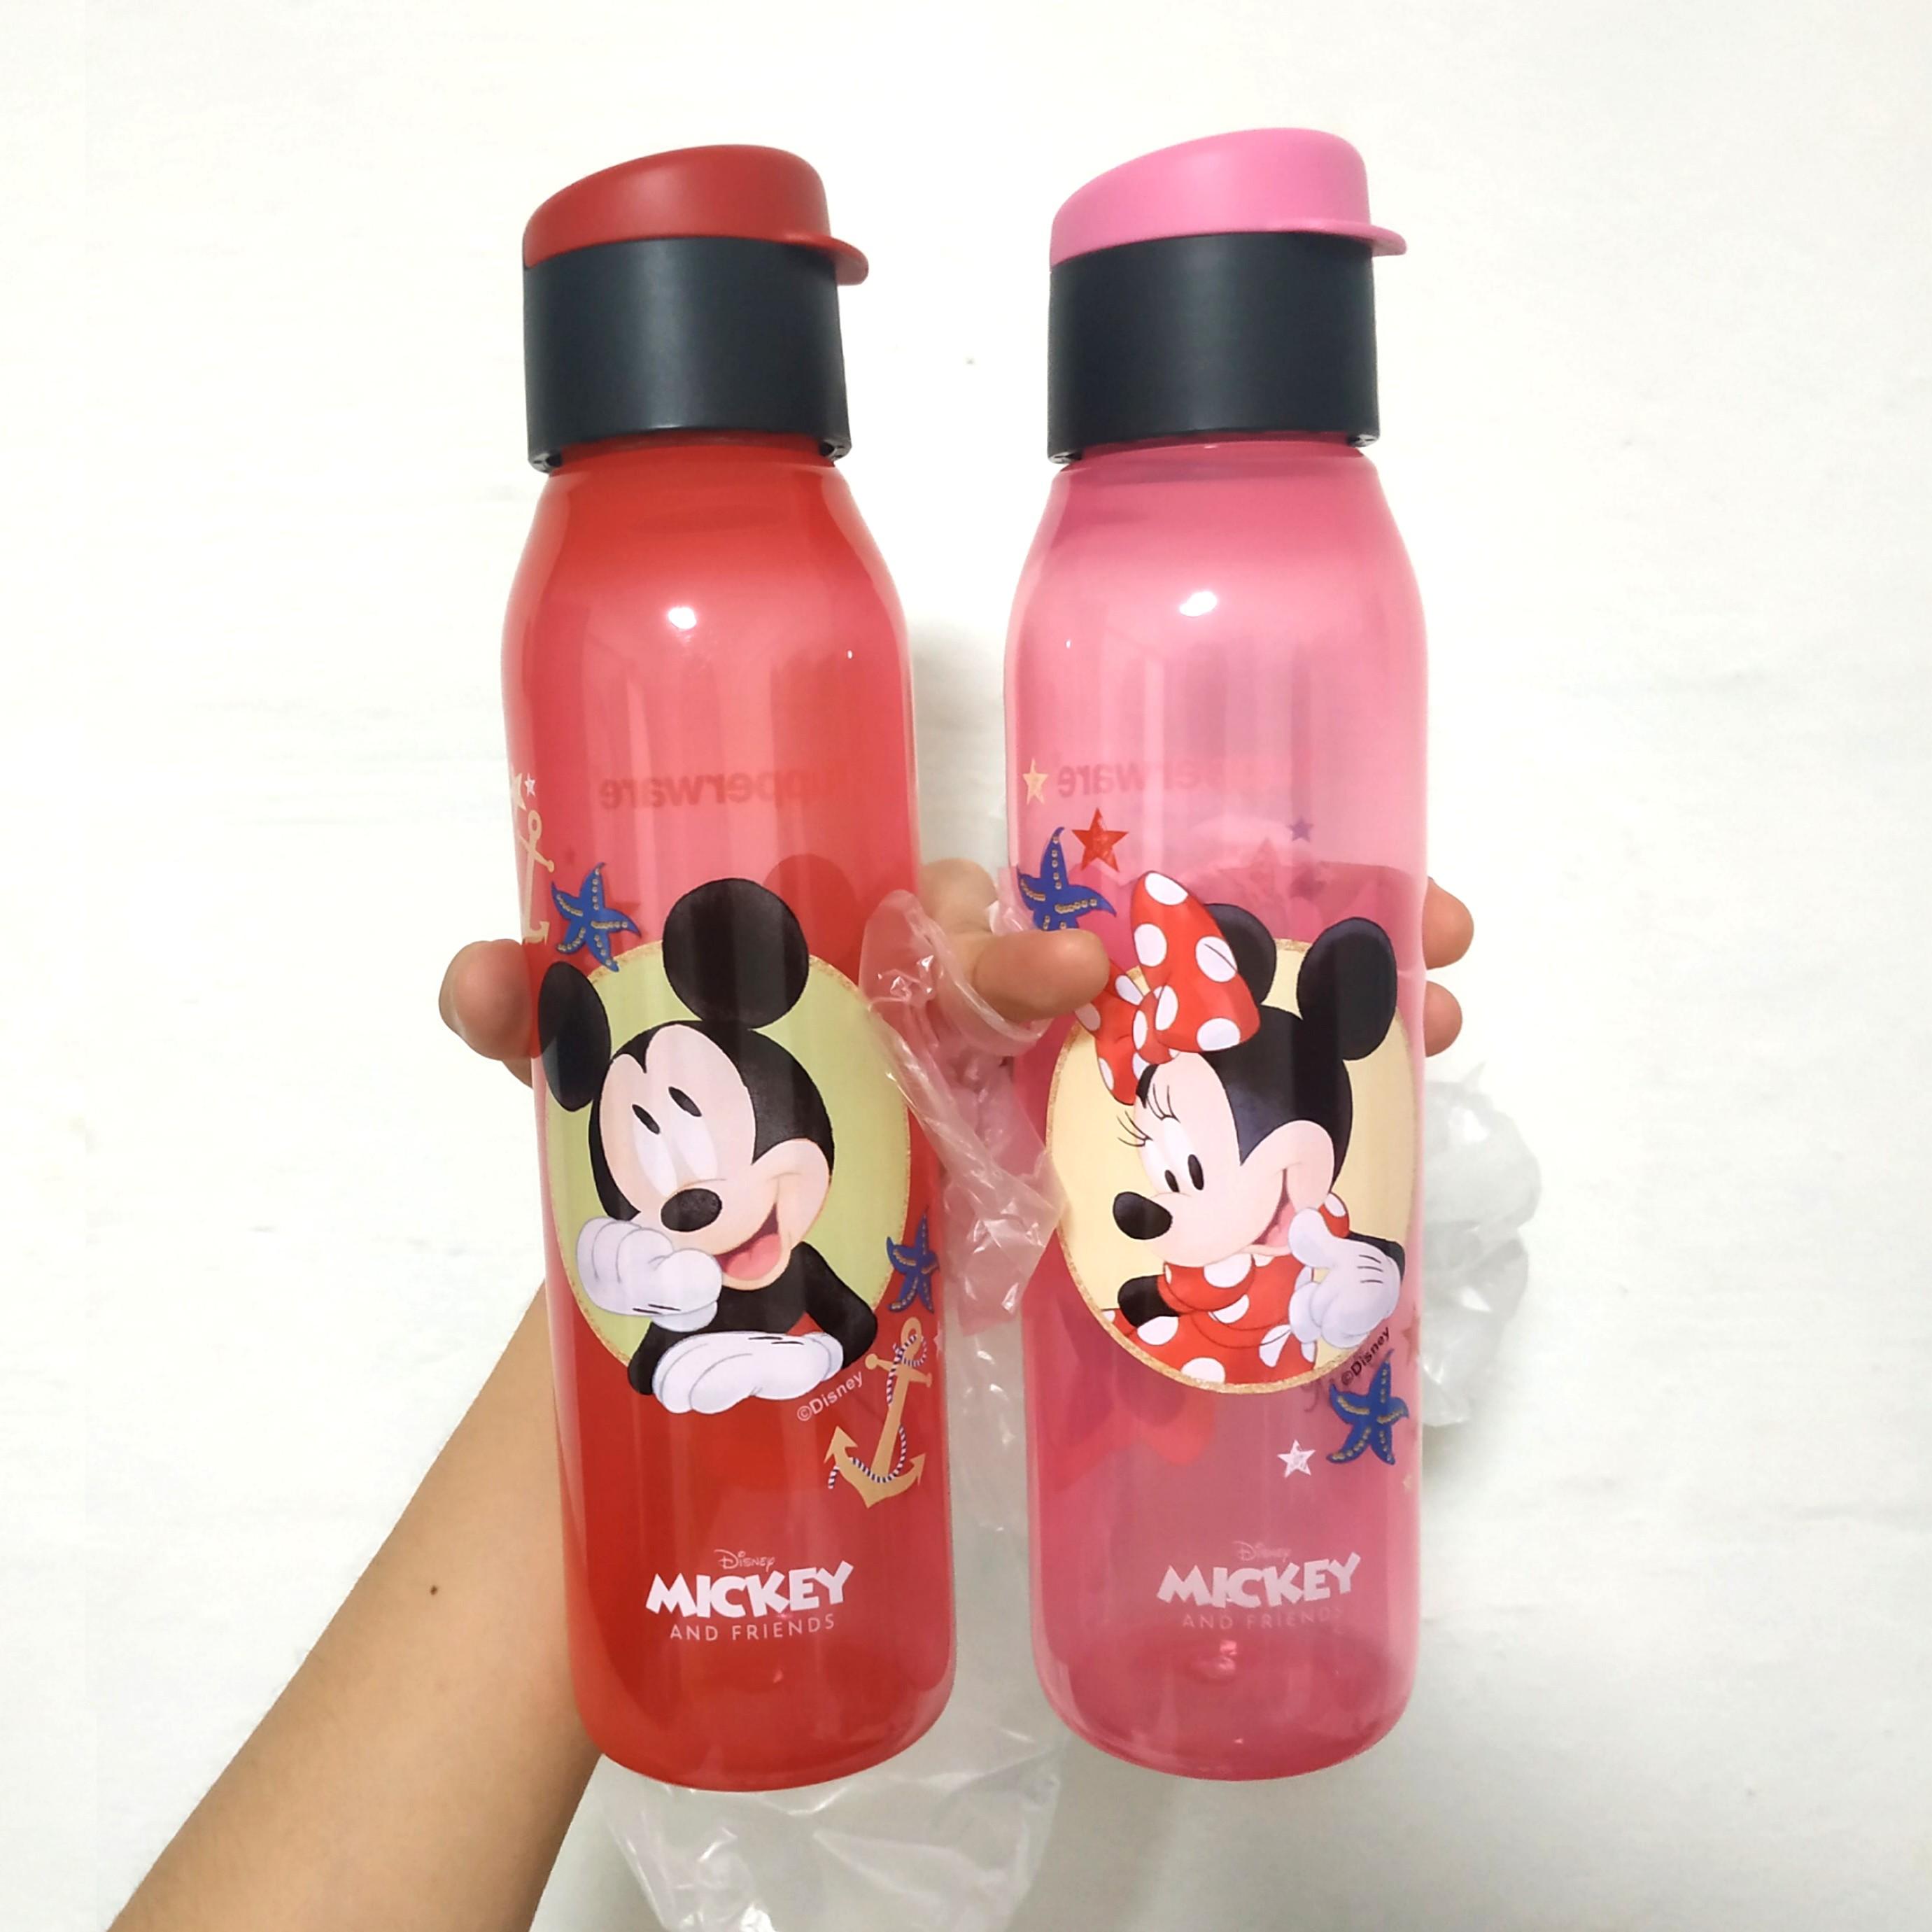 Disney Mickey & Minnie Mouse Flip Top Water Bottle 802355